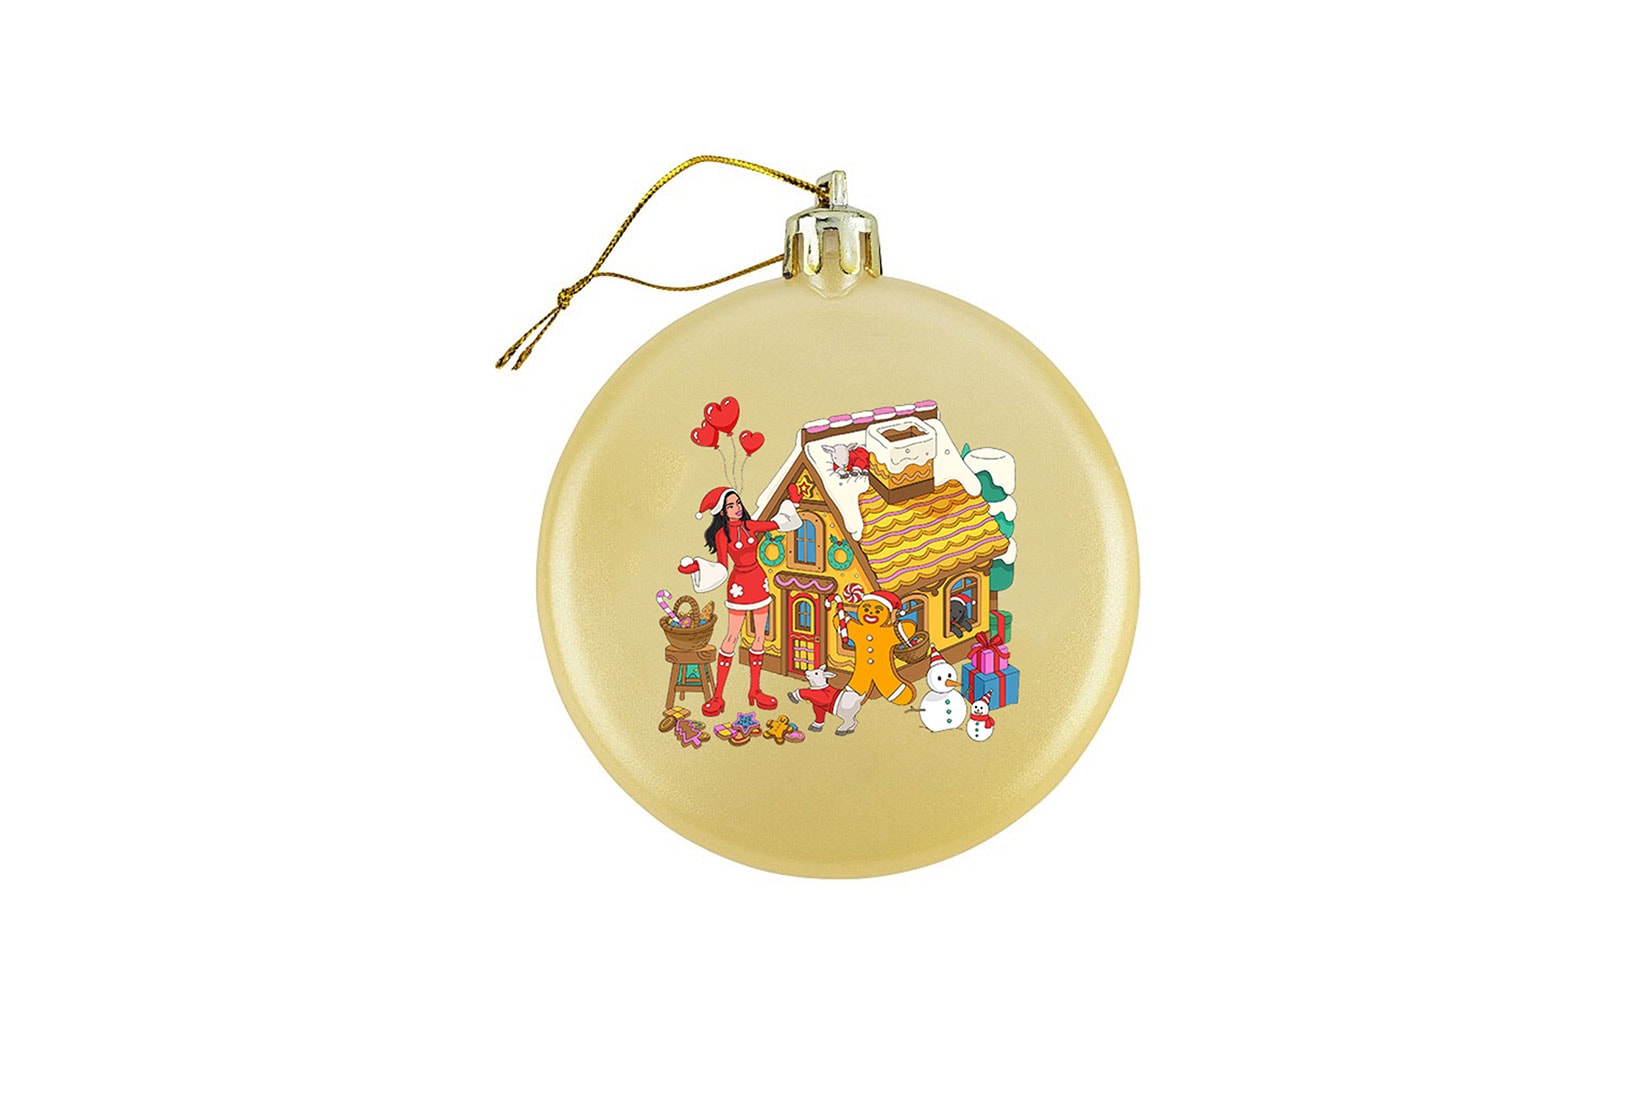 Dua Lipa Holiday 2021 Christmas Merch Collection Bauble Ornament